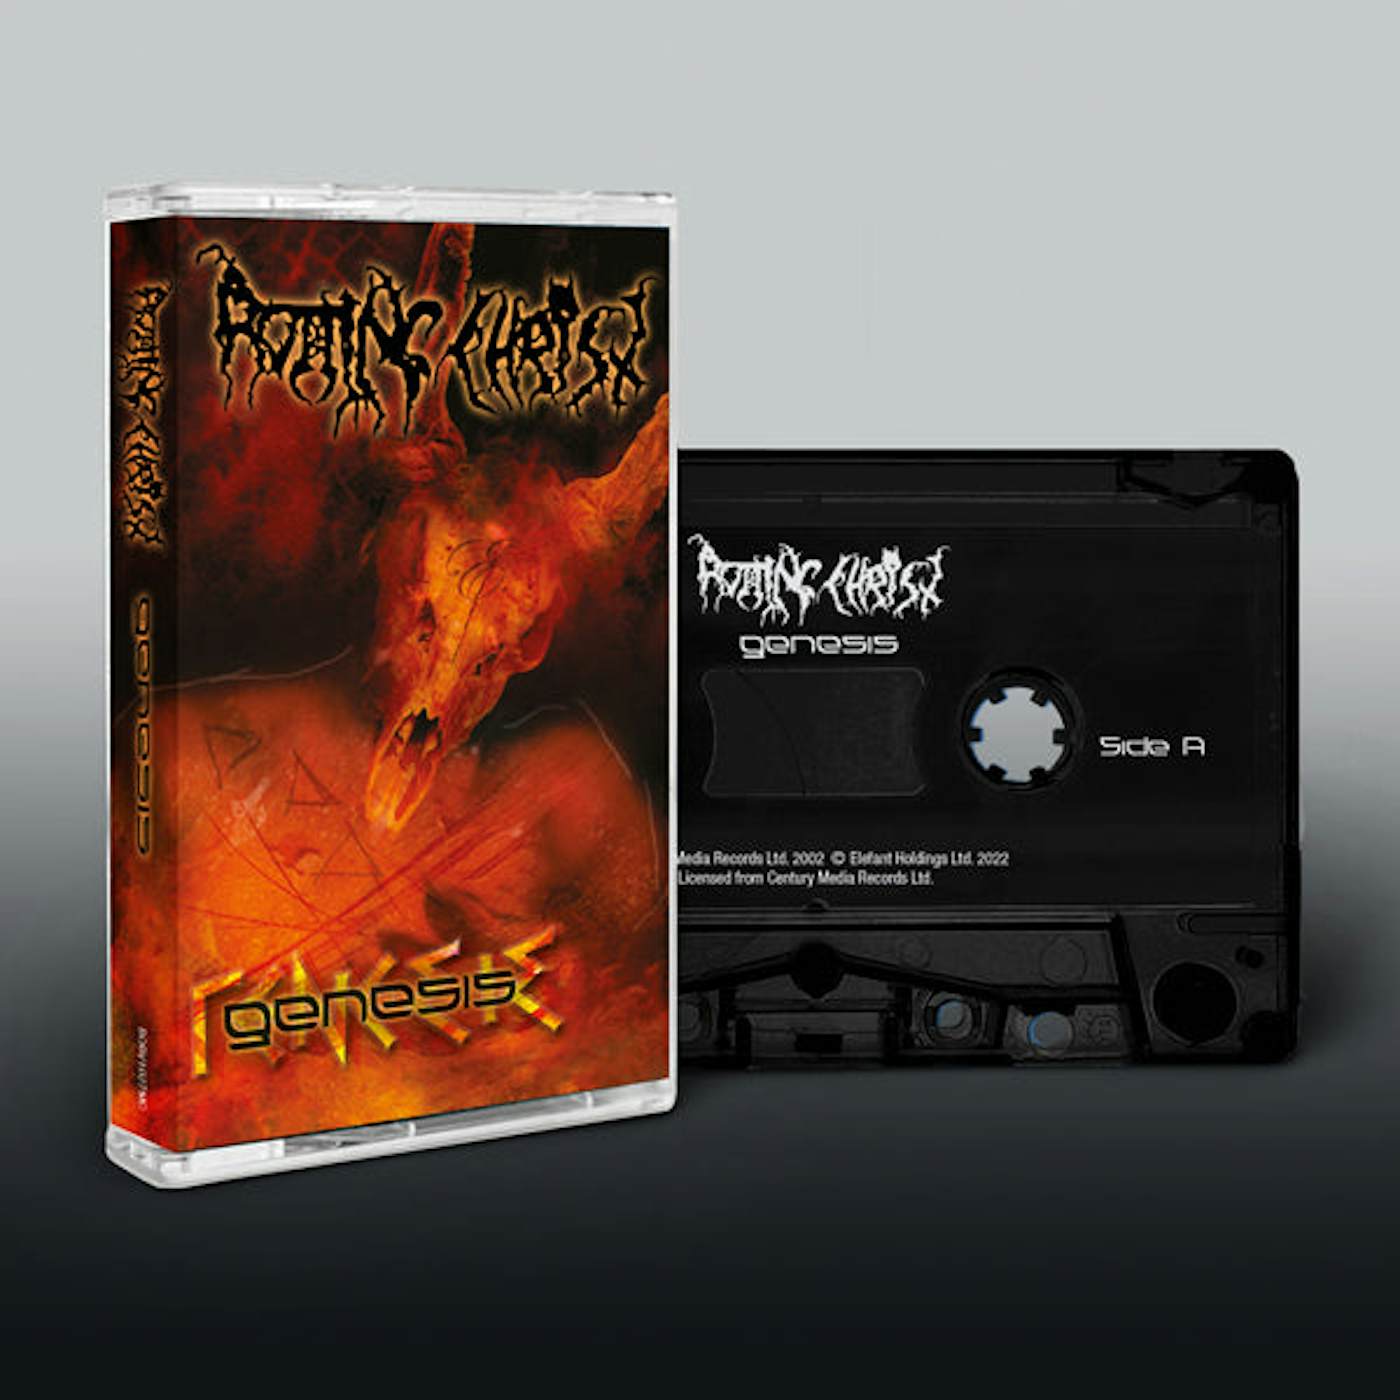 Rotting Christ Music Cassette - Genesis